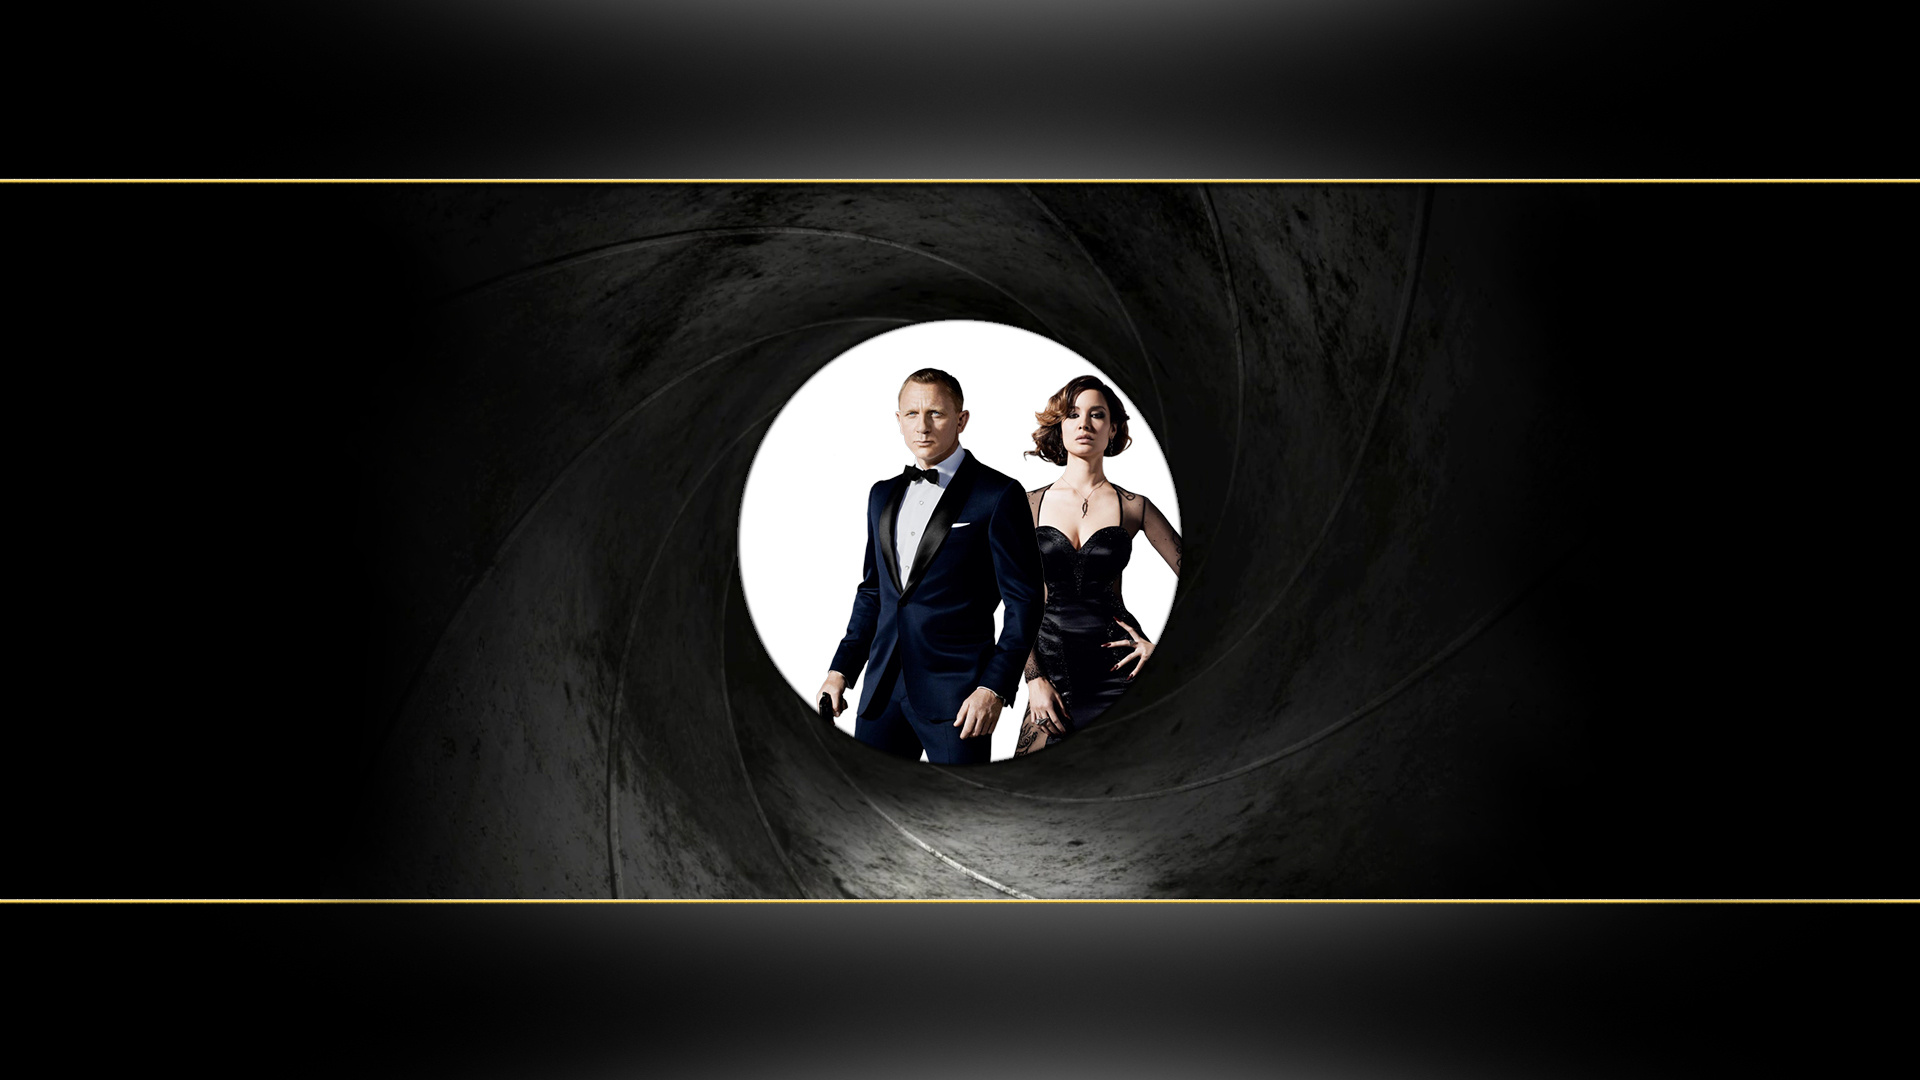 Skyfall: Bond and Severine, Female companion. 1920x1080 Full HD Background.